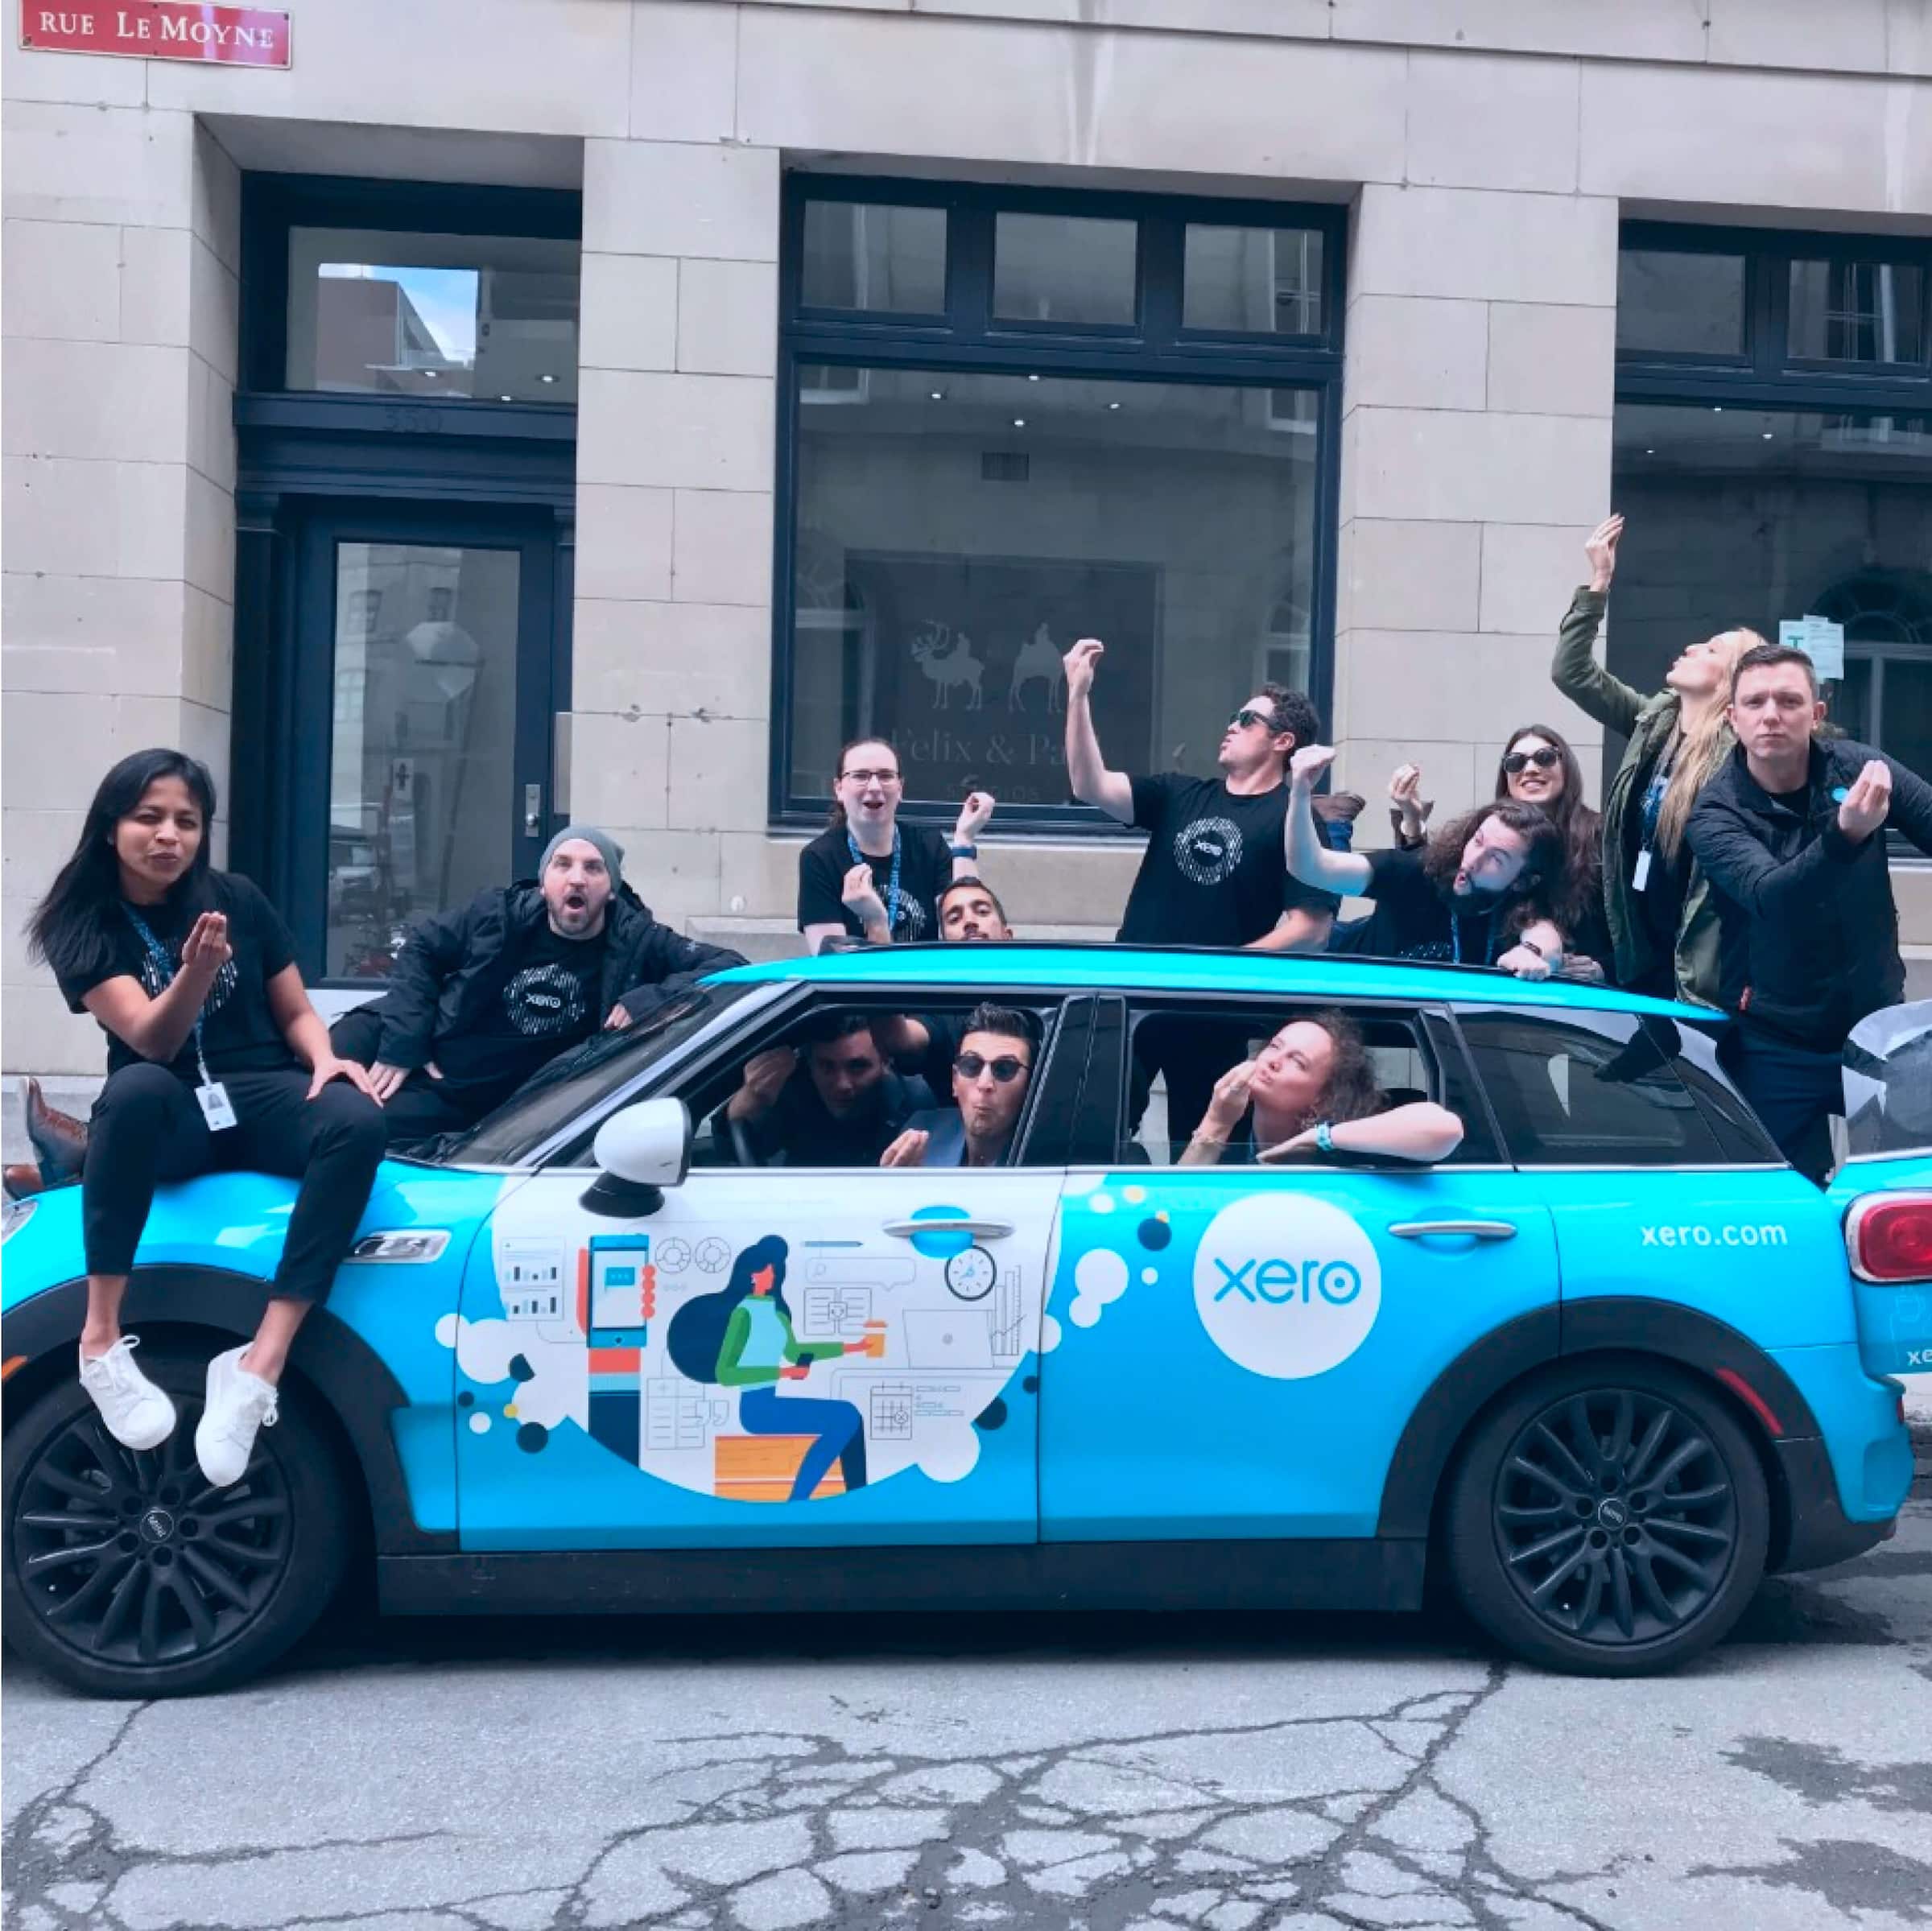 The Xero Wellington team and the Xero Canada team take a wacky pose in front of a Xero-branded car.